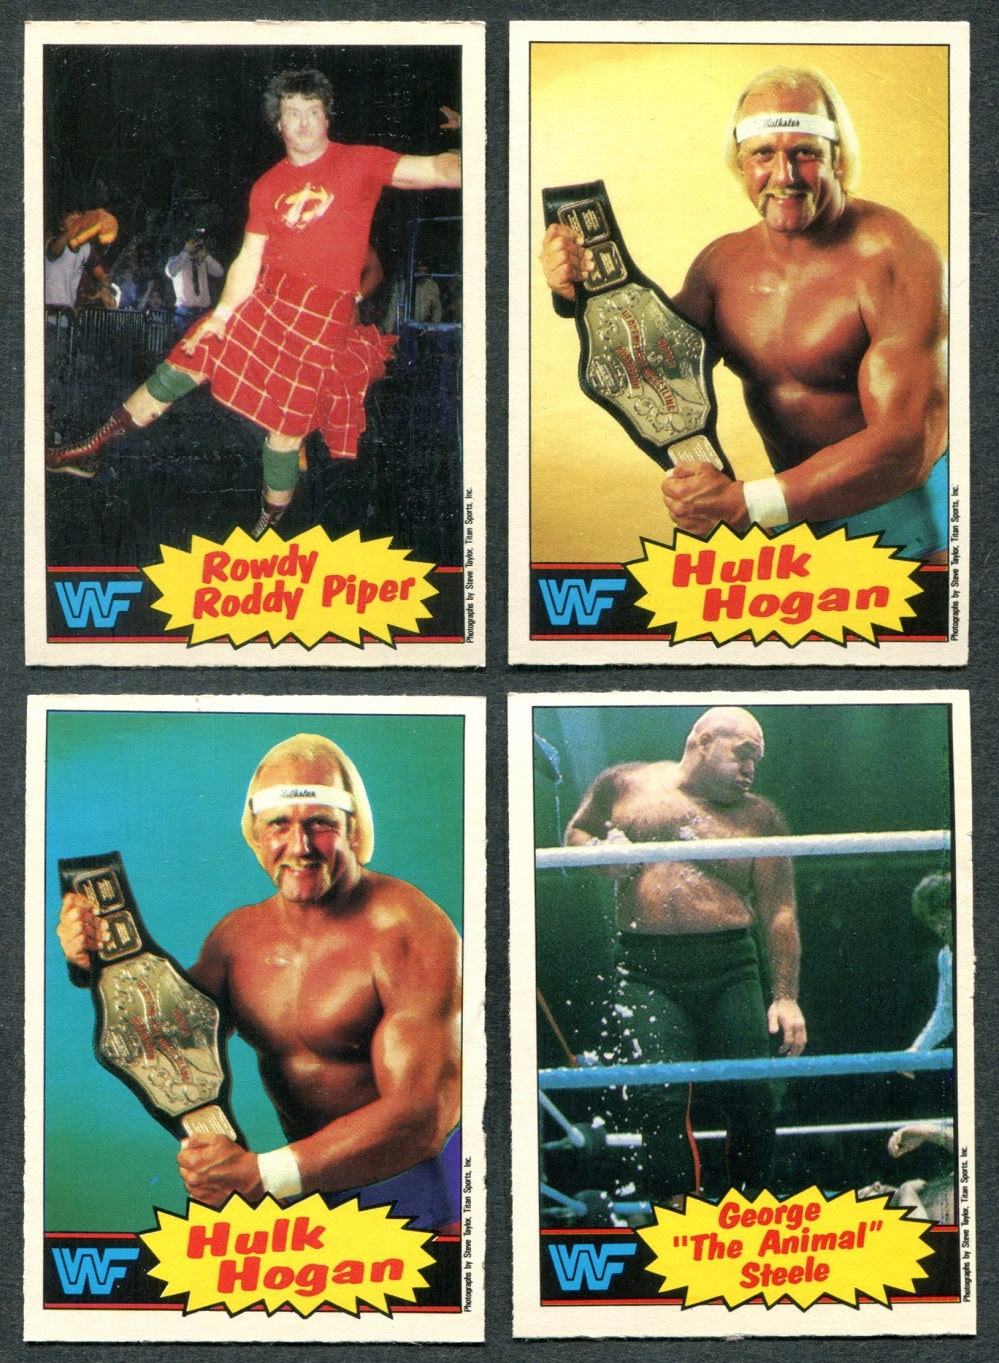 1985 OPC O-Pee-Chee WWF Wrestling Complete Series 1 Set (66) VG/EX EX/MT (Set #2)